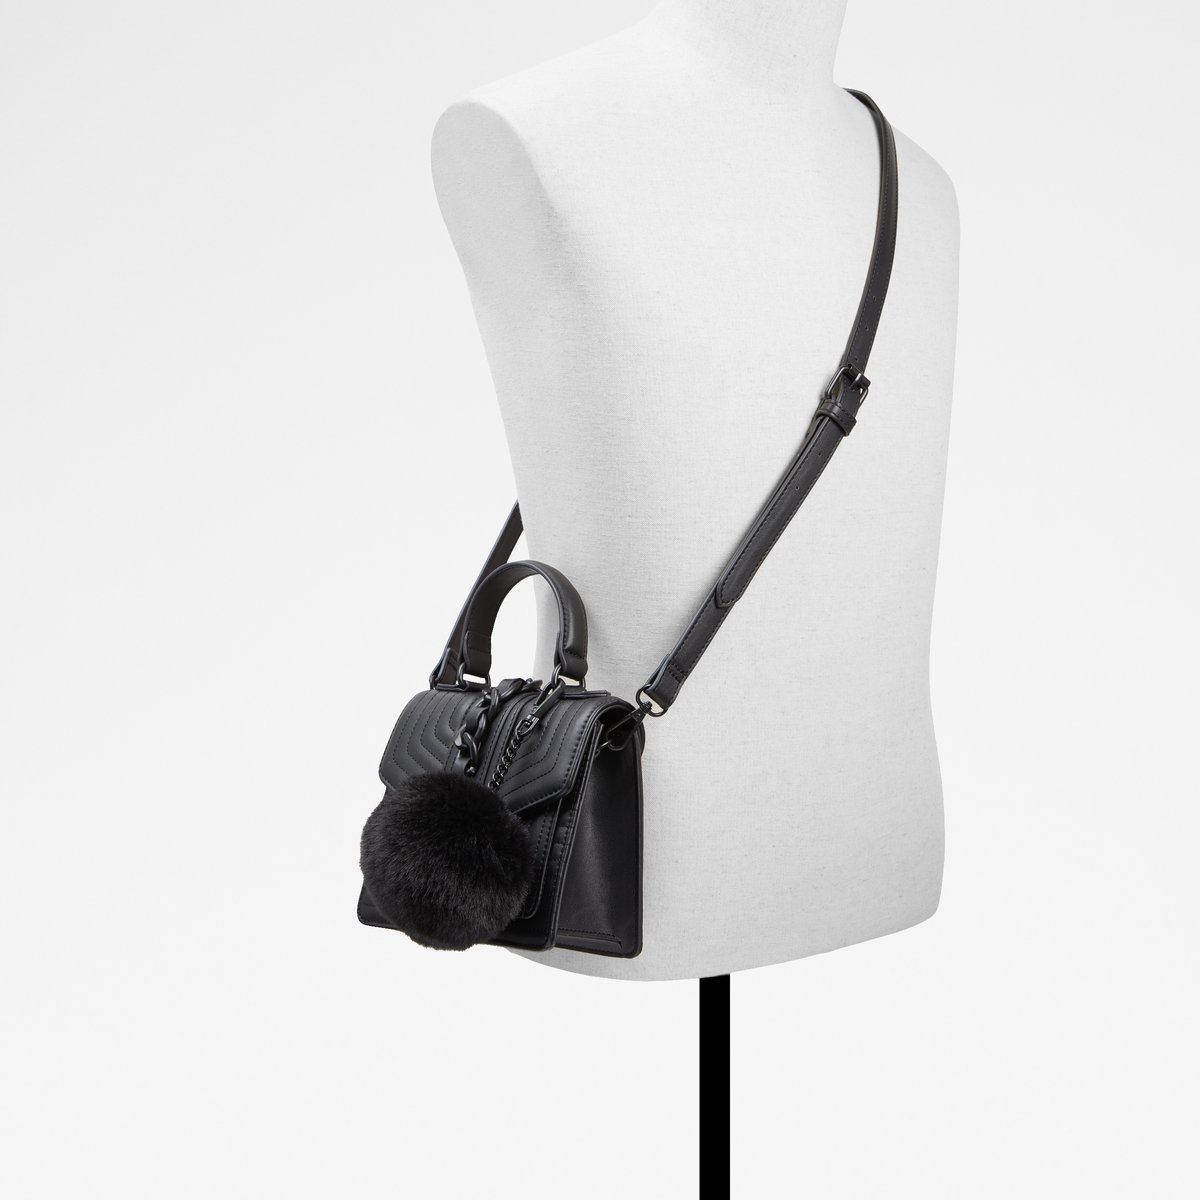 Louis Vuitton pre-owned Transsiberian Bag - Farfetch